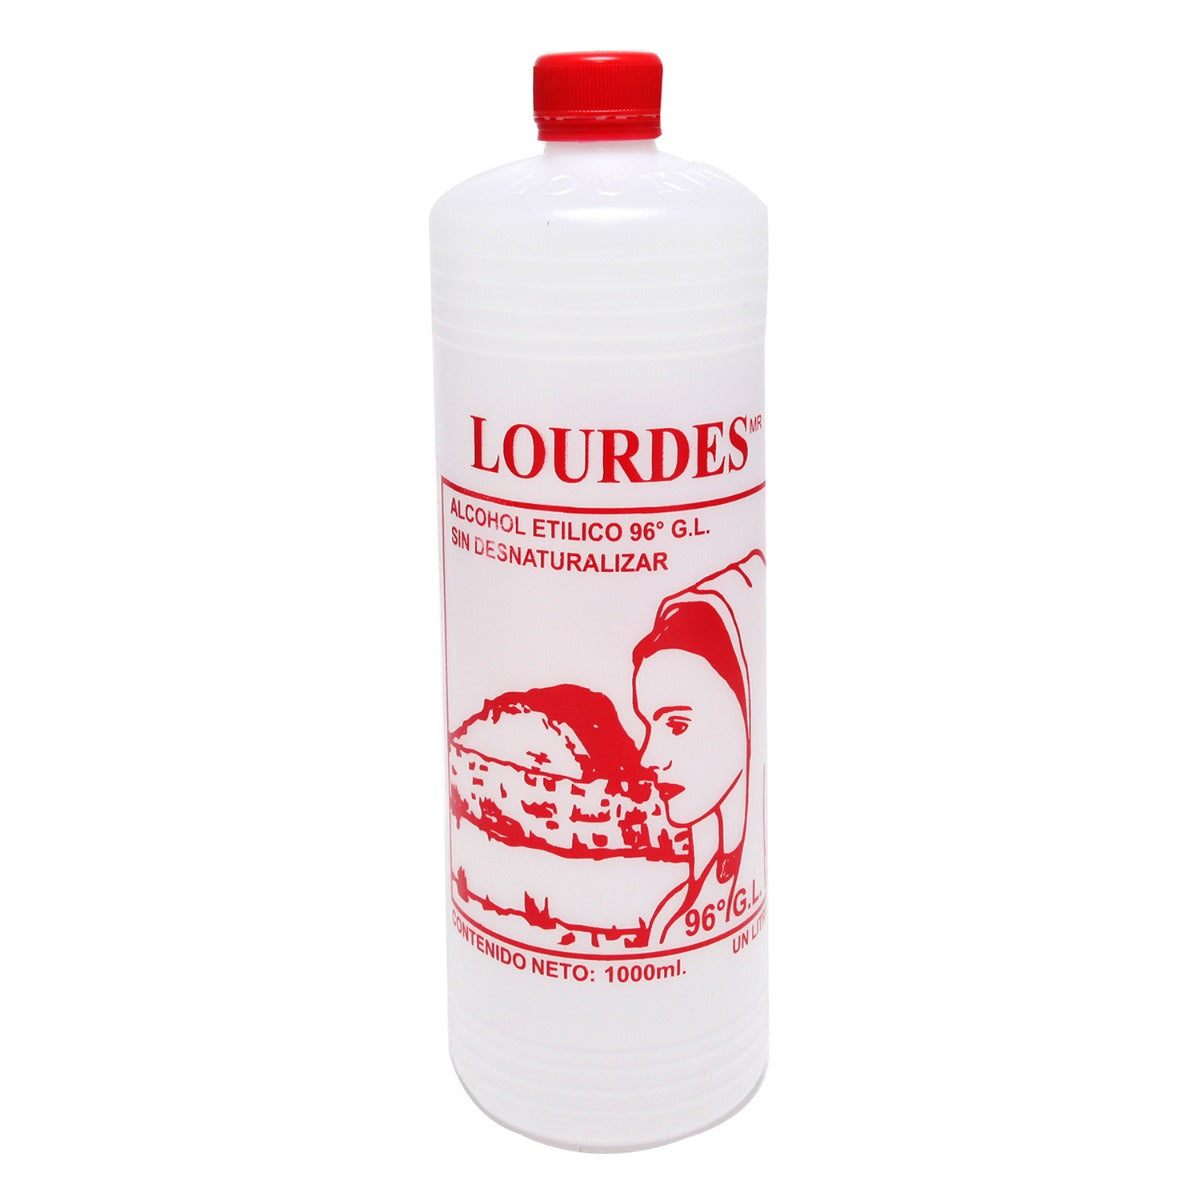 Alcohol Etilico Lourdes del Botella 1 Litro